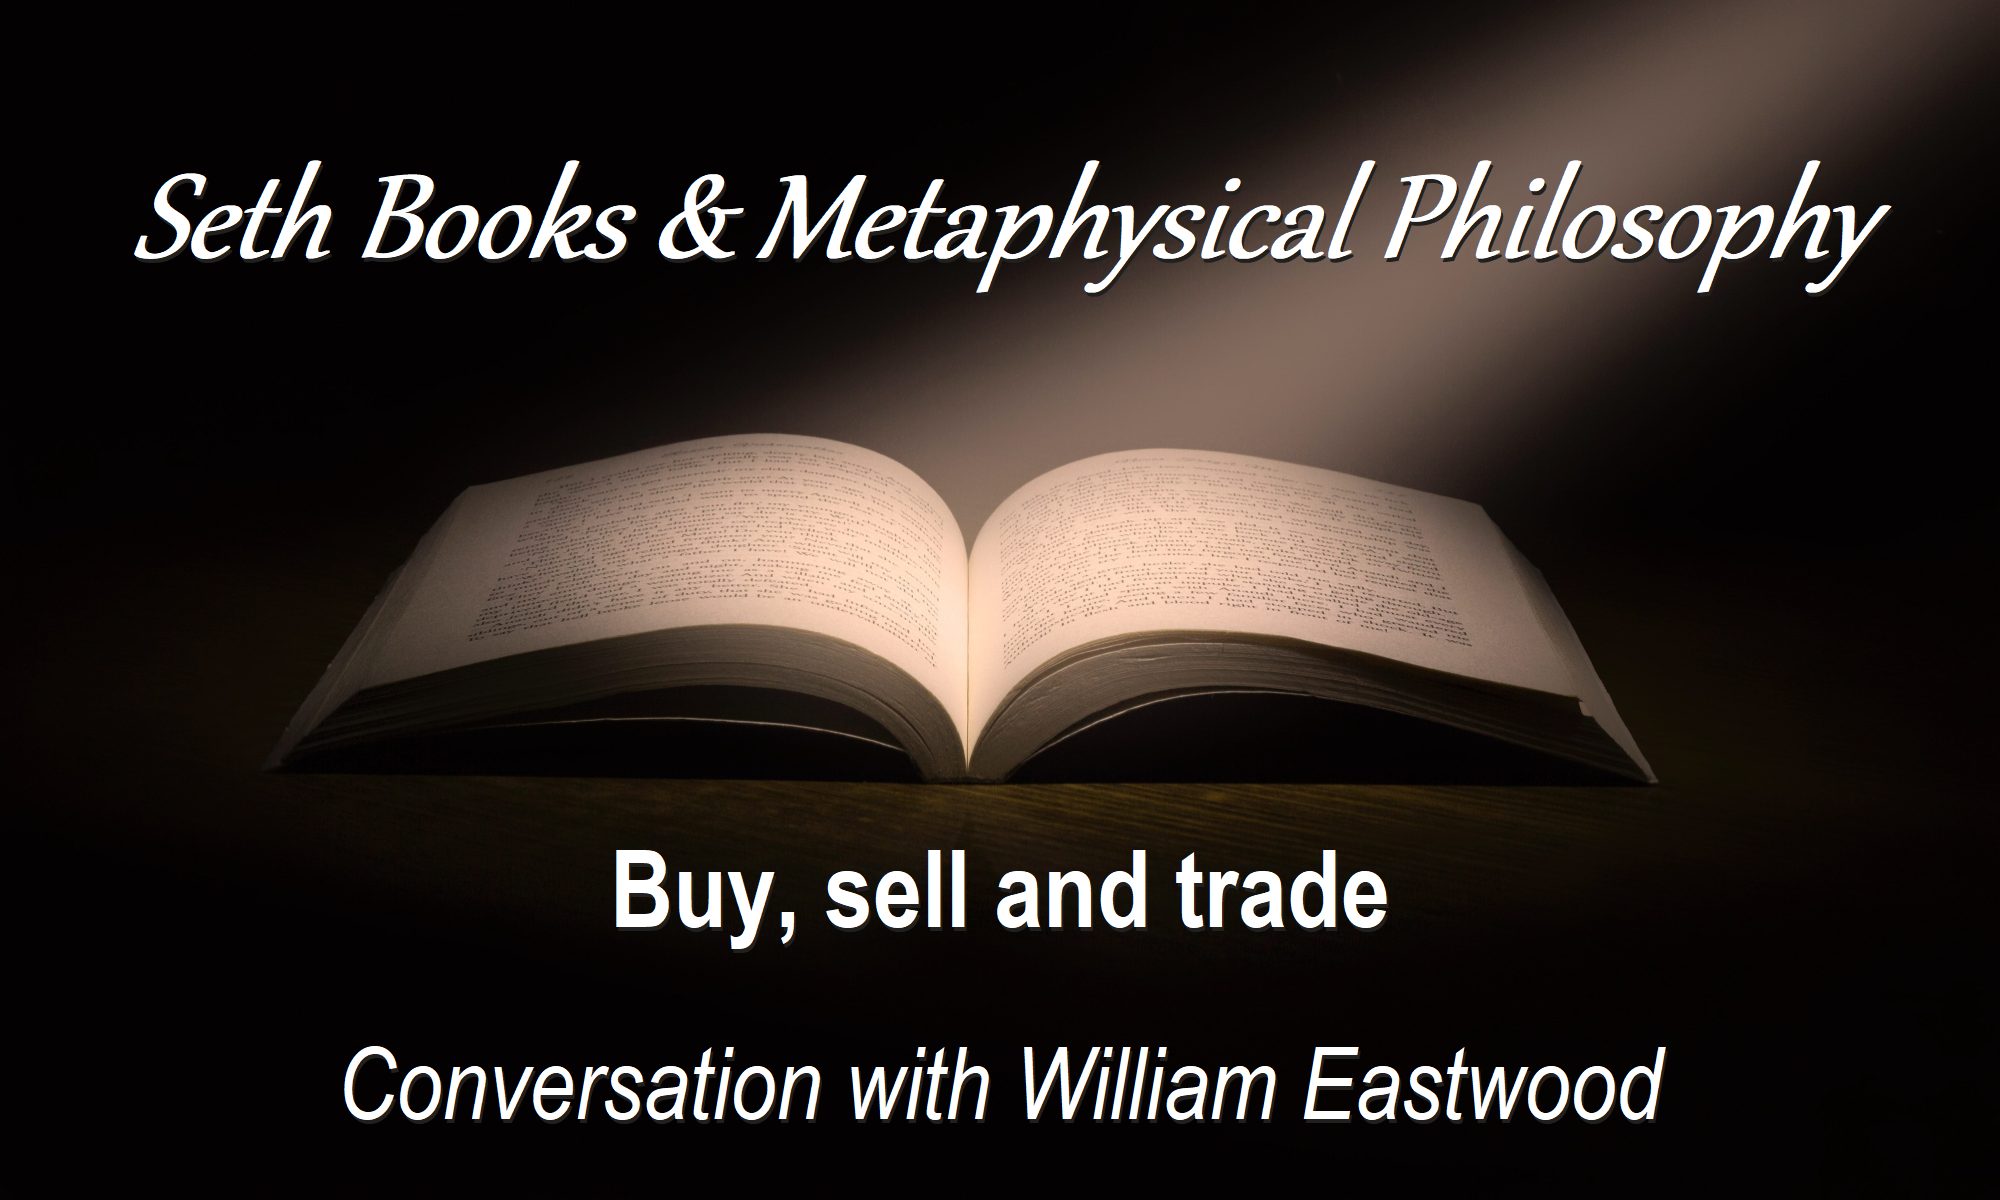 Seth Books eBooks Conversation: Buy, Sell, Trade Metaphysical Philosophy